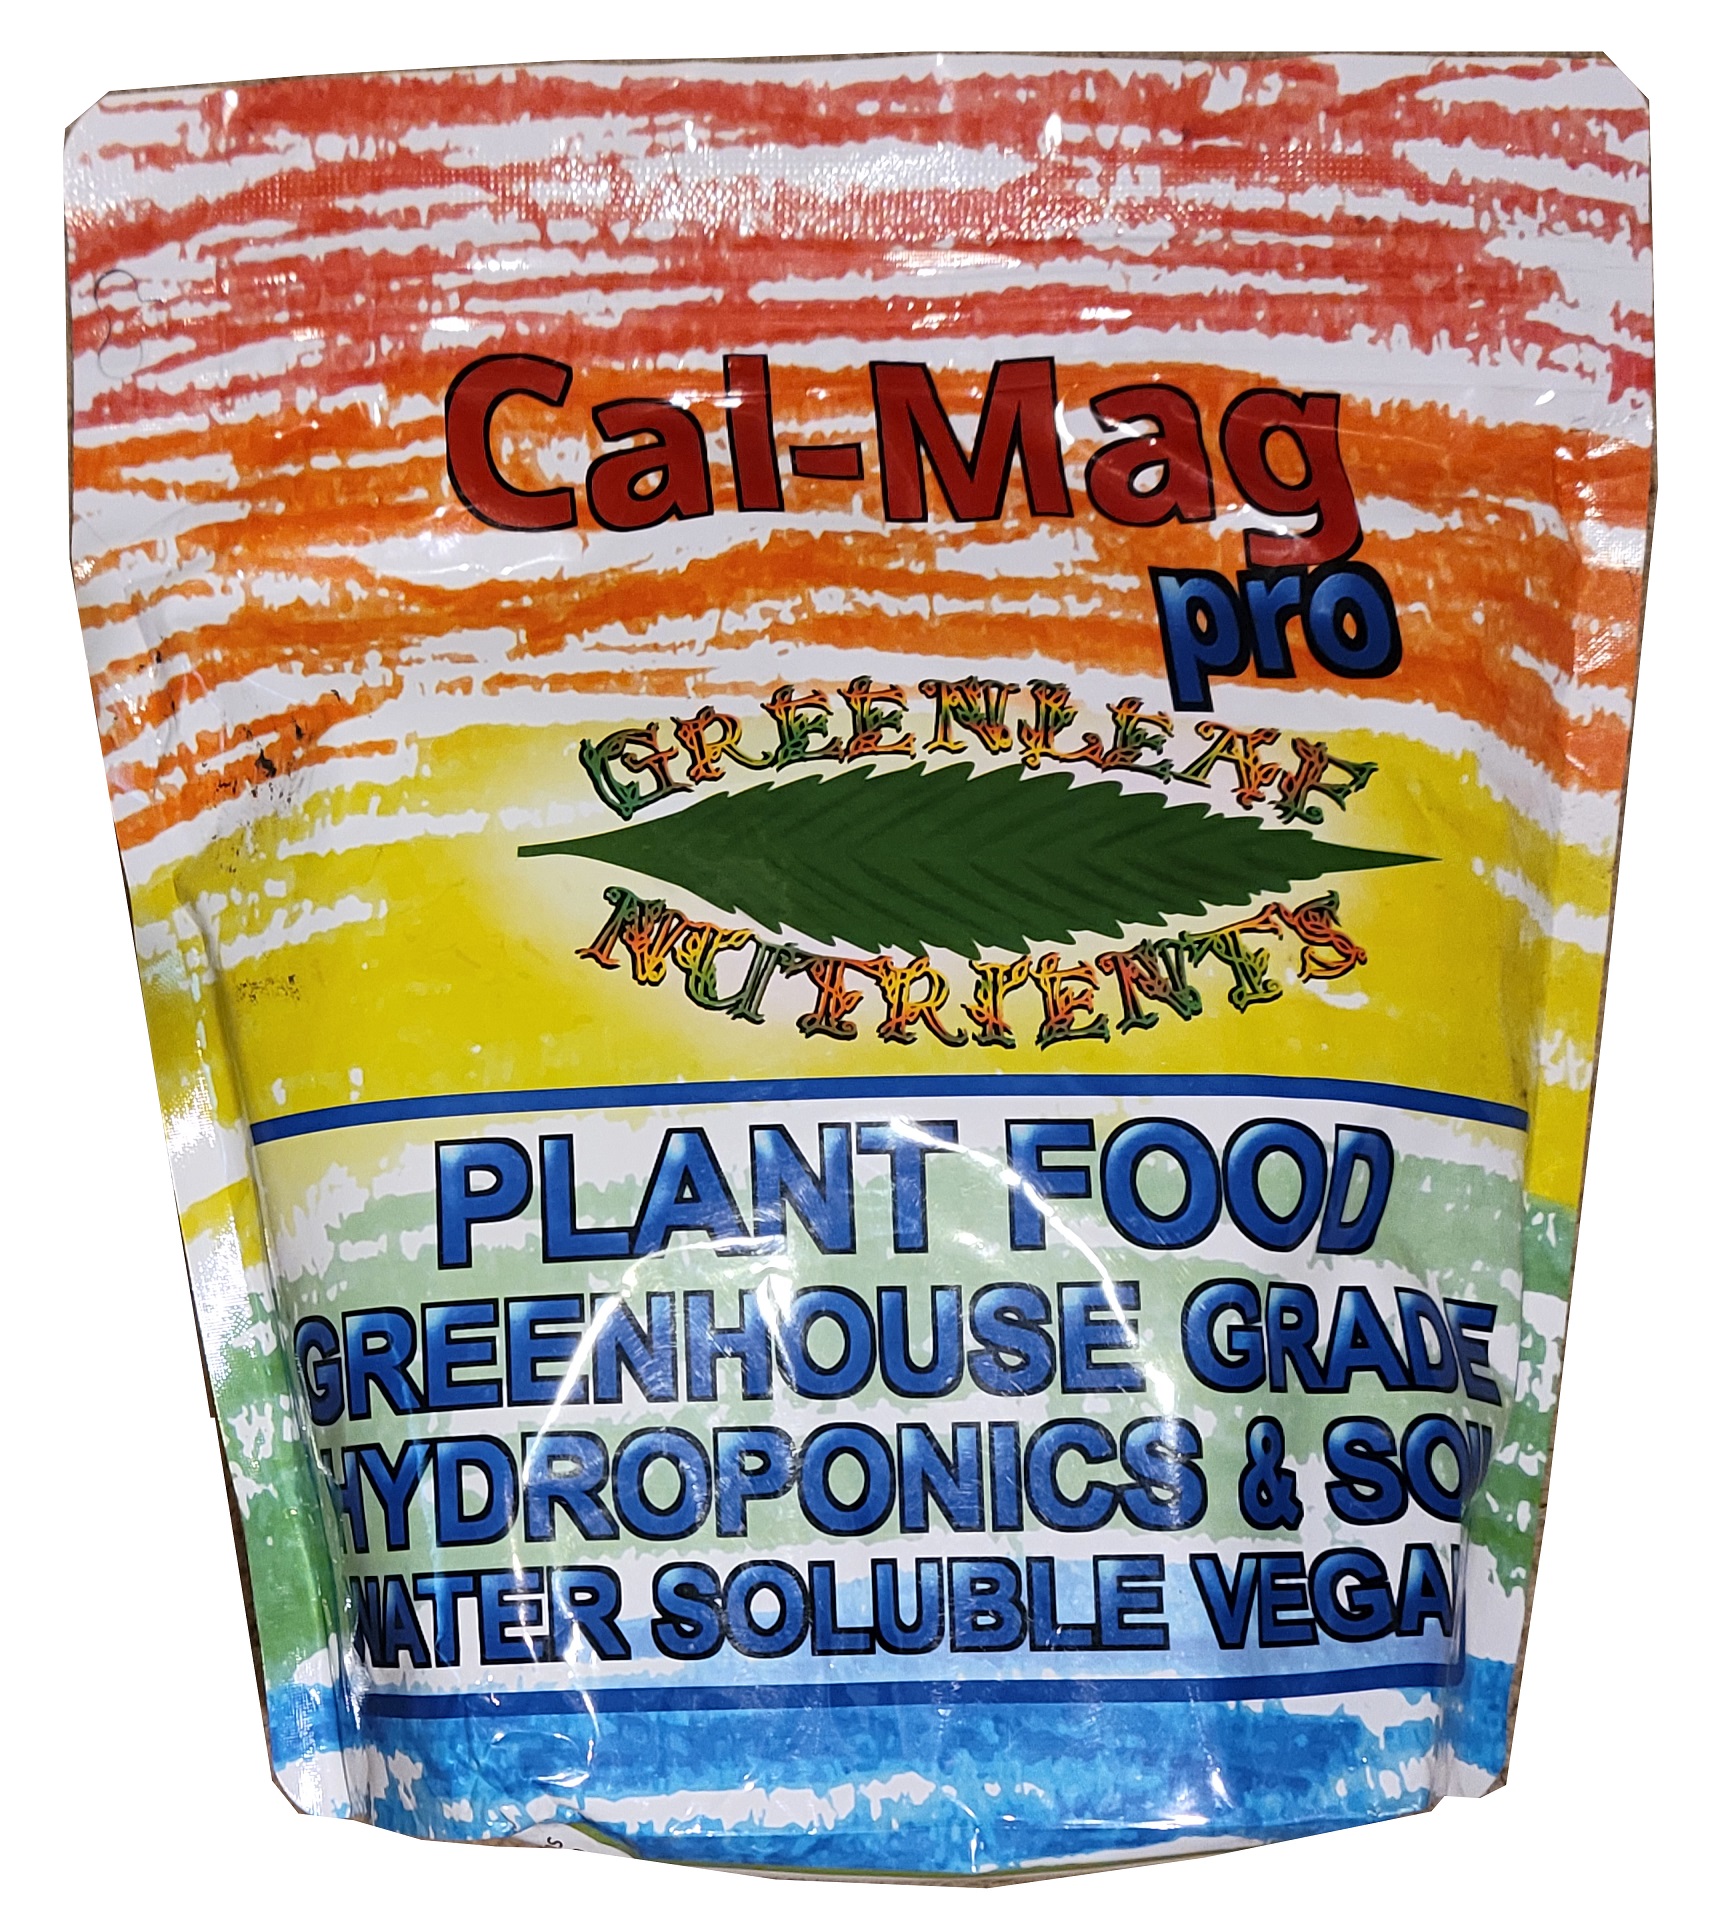 Cal+Mag Pro – Greenleaf Nutrients